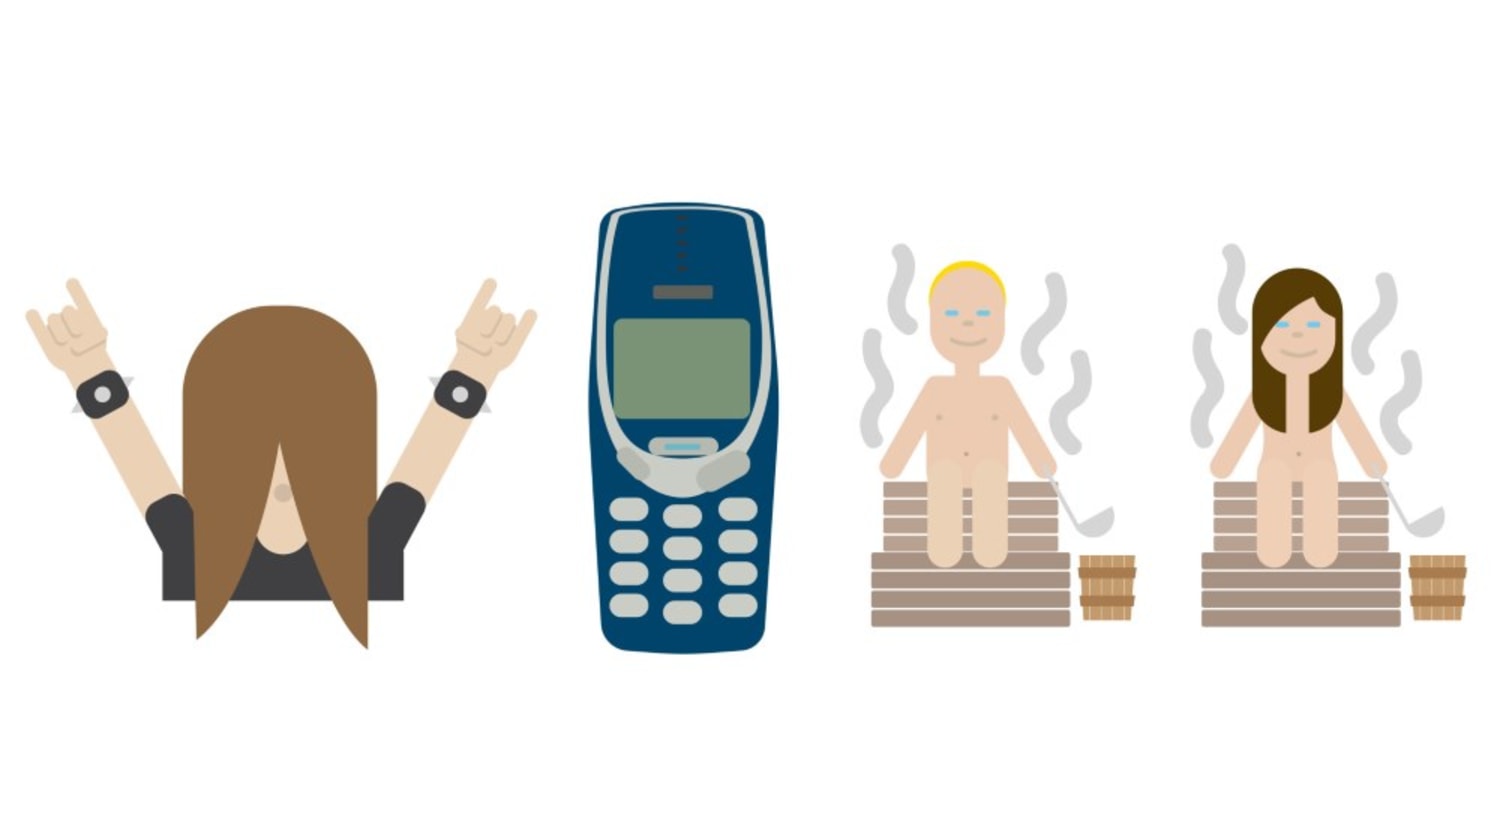 Finland designs its own unique set of emoji saunas nokias and more